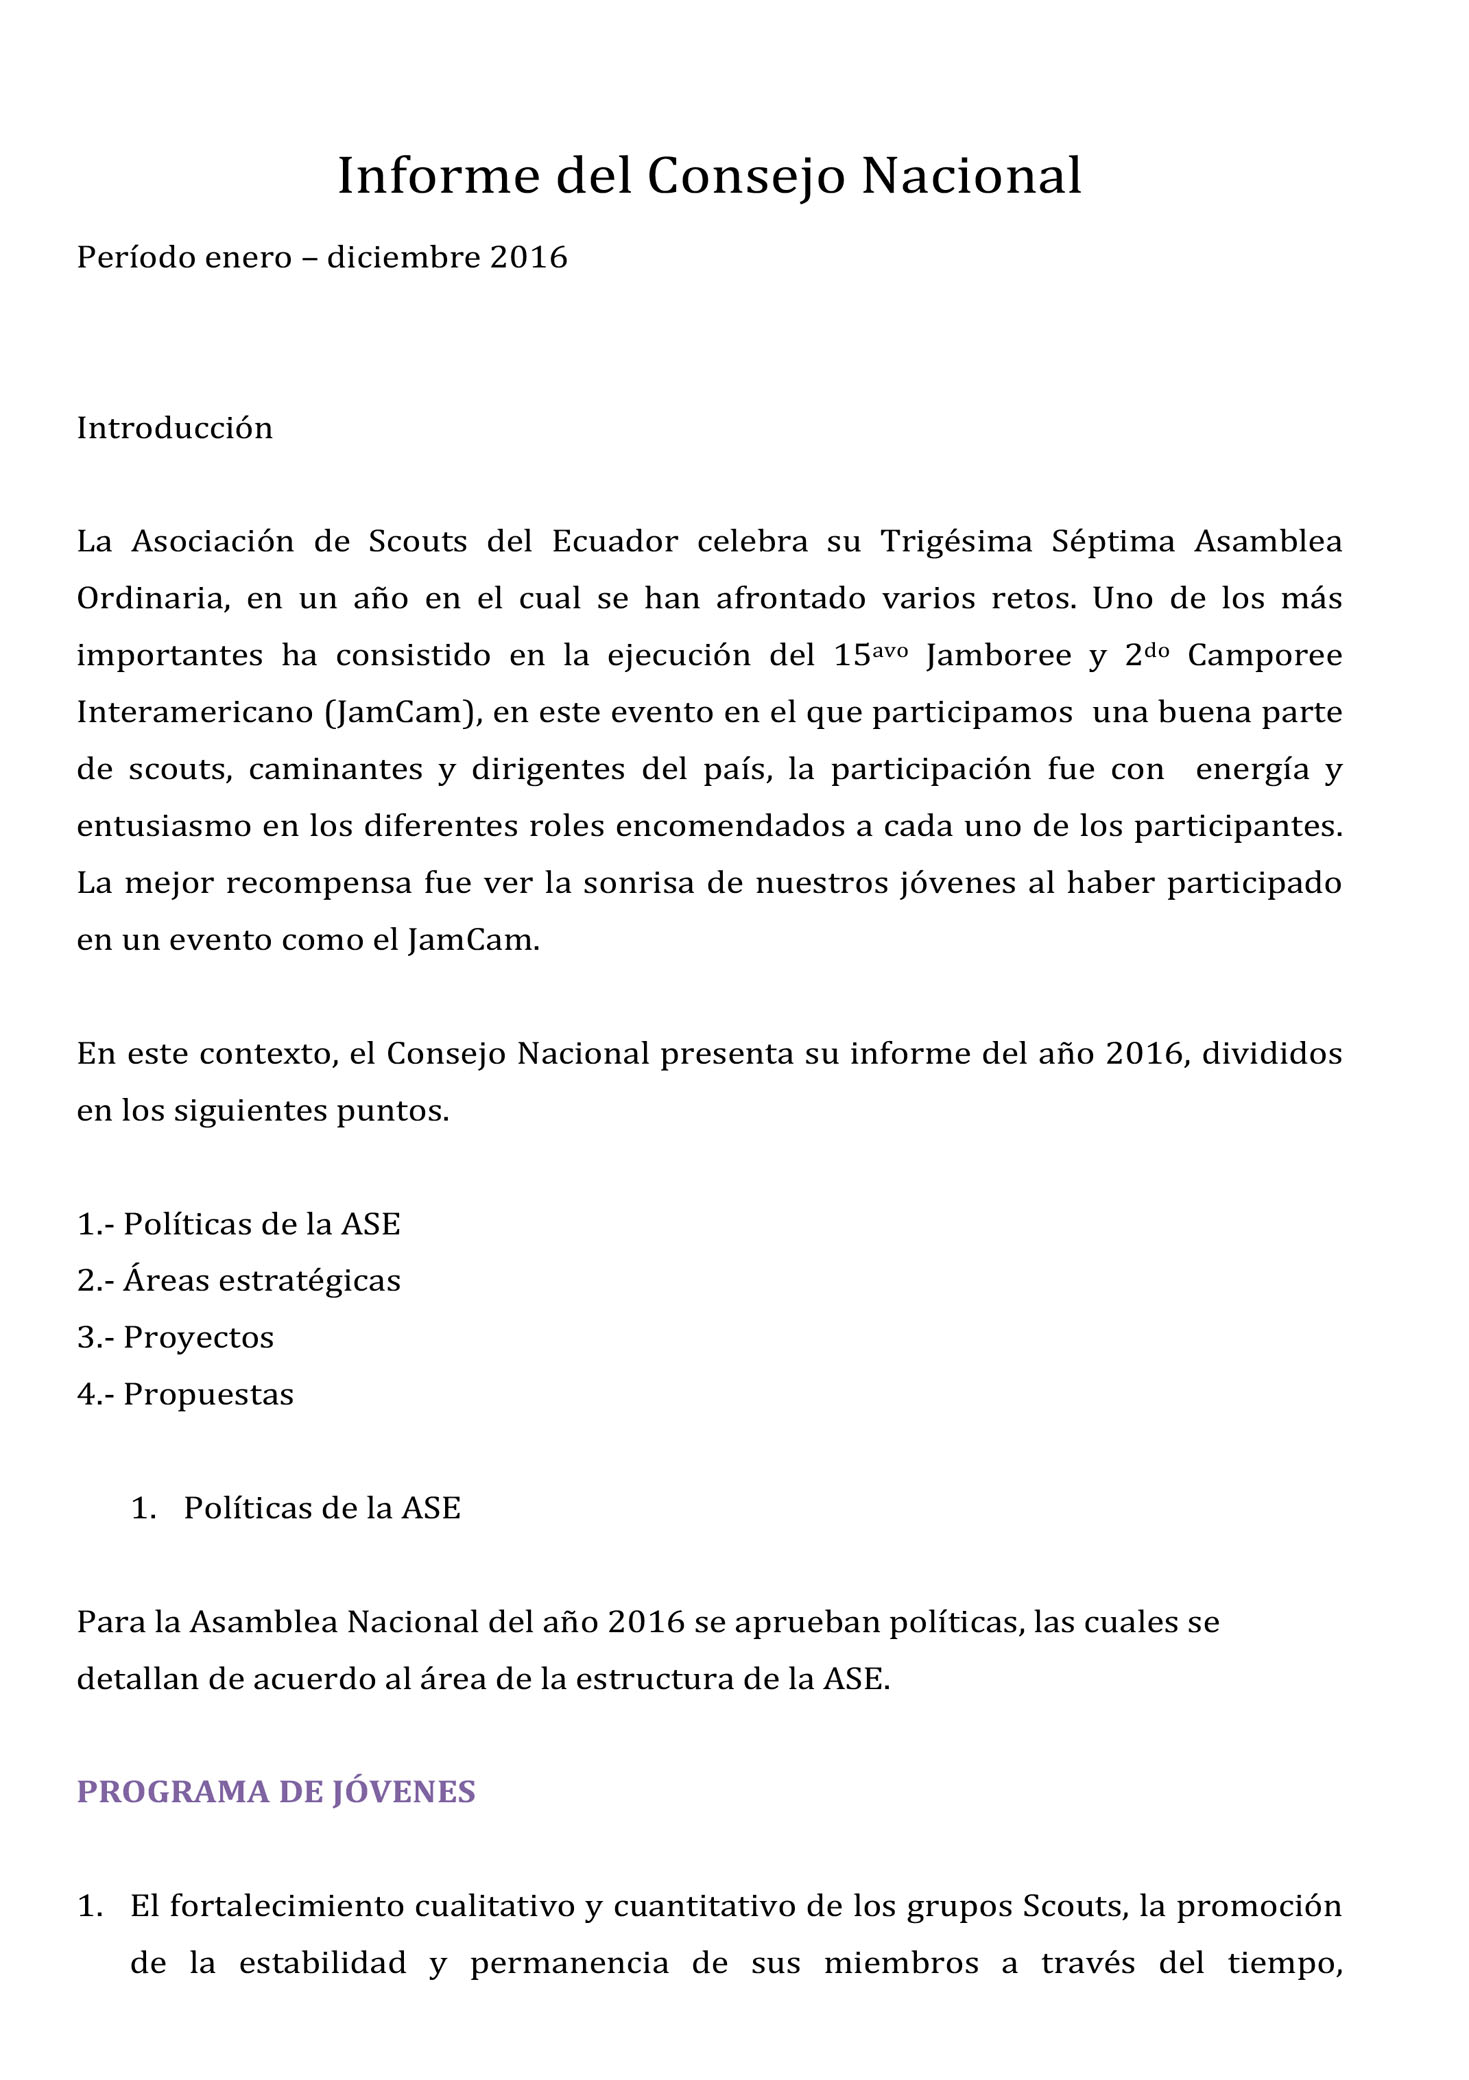 Informe Consejo Nacional 2016 - Periodo 2015